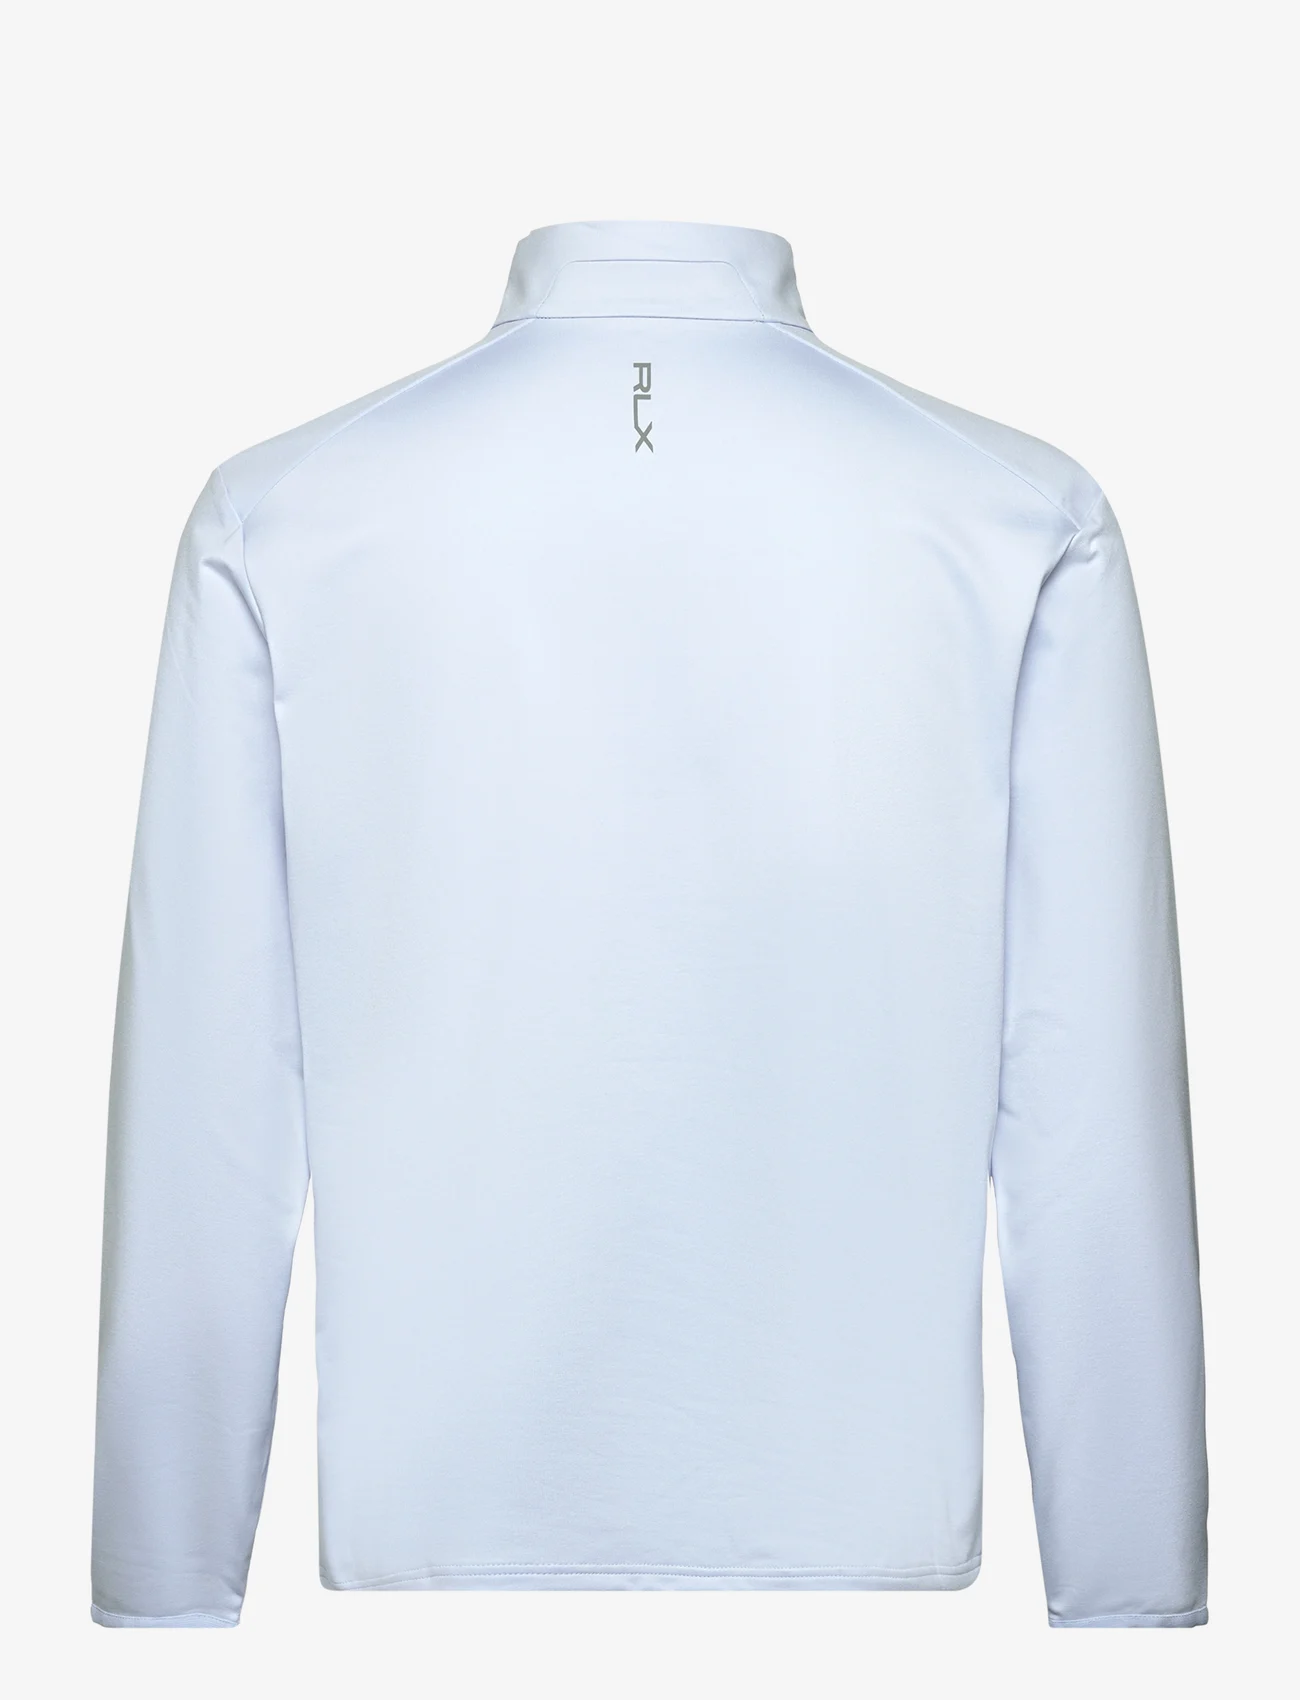 Ralph Lauren Golf - Classic Fit Luxury Jersey Pullover - basic adījumi - oxford blue - 1